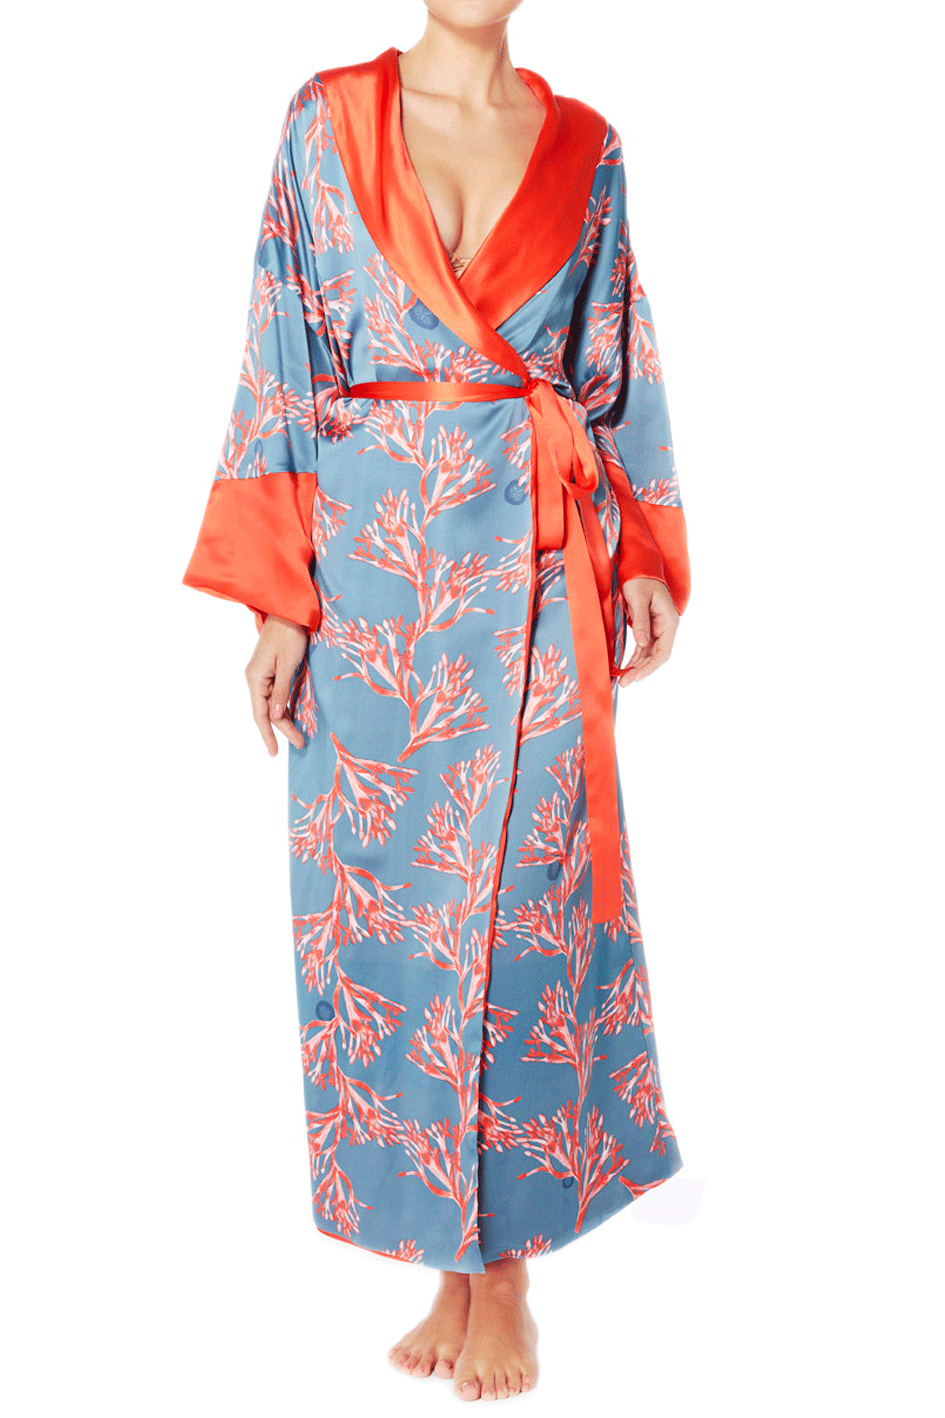 Xuepelit Bride Silk Dressing Gown for Women UK Ladies Kimono Satin Robe  Lightweight Japanese Wedding Dressing Gowns Pyjama Short,Champagne,M :  Amazon.co.uk: Fashion